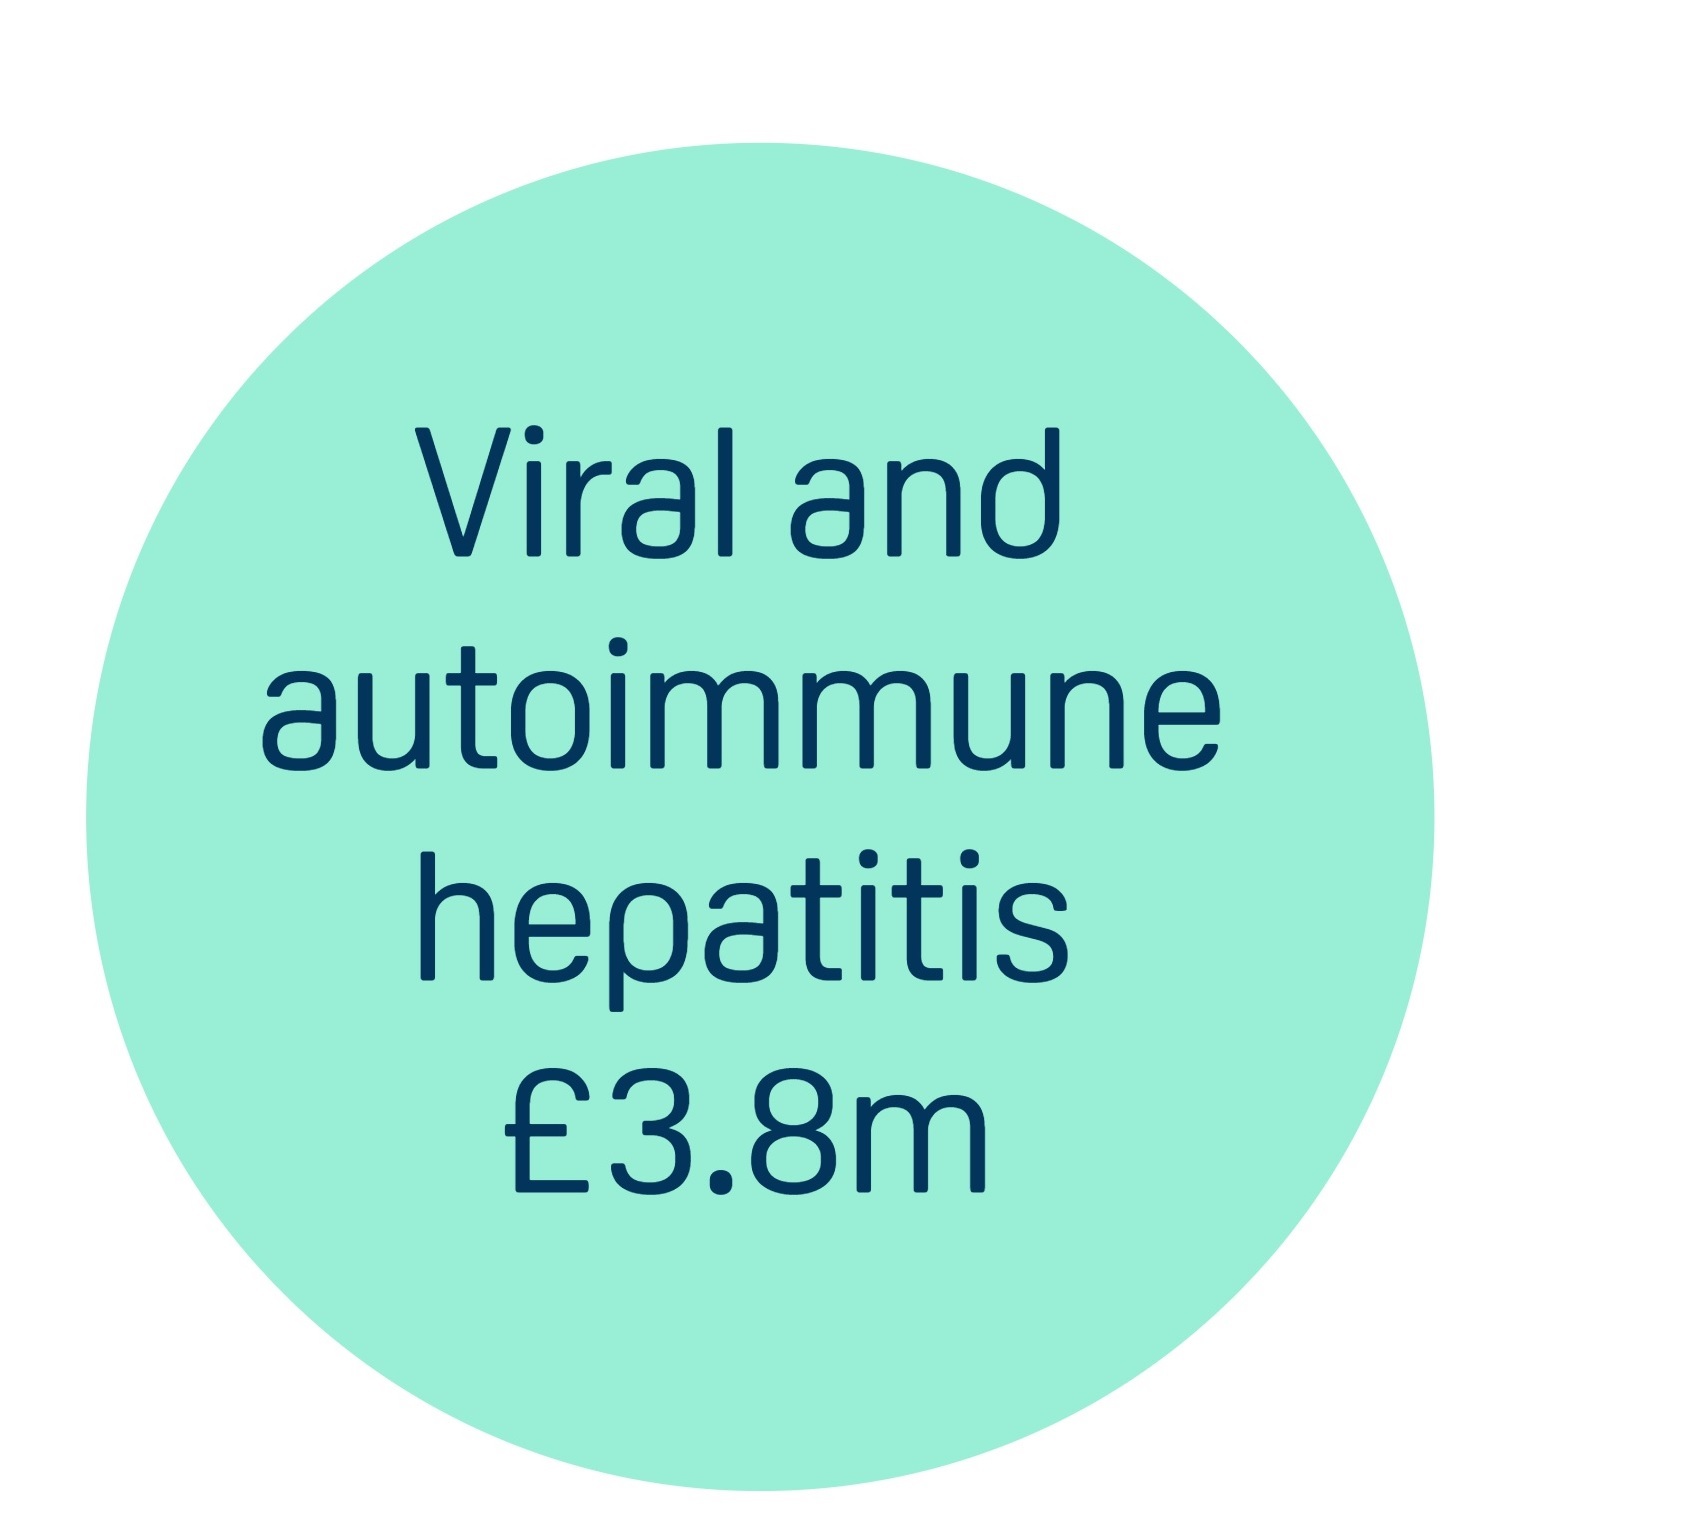 Viral and autoimmune hepatitis £3.8m